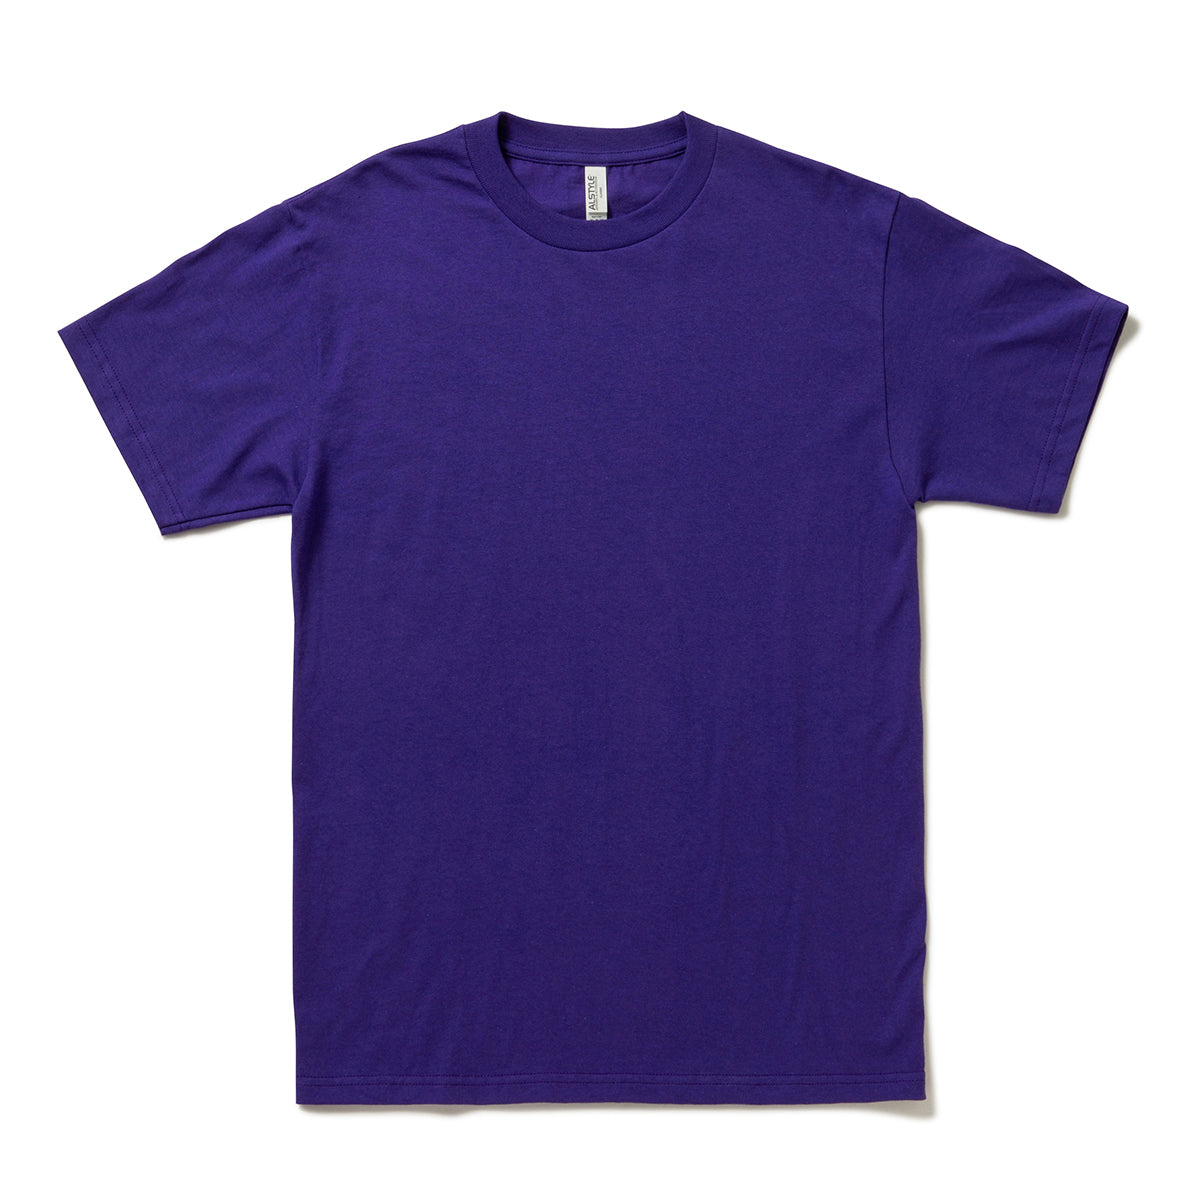 USA Beaux Atkins ロゴ Tシャツ sizeL 紫 パープル ボーズアトキンス サザンロック バンドT 音楽 ルイジアナ州 アメリカ アメカジ